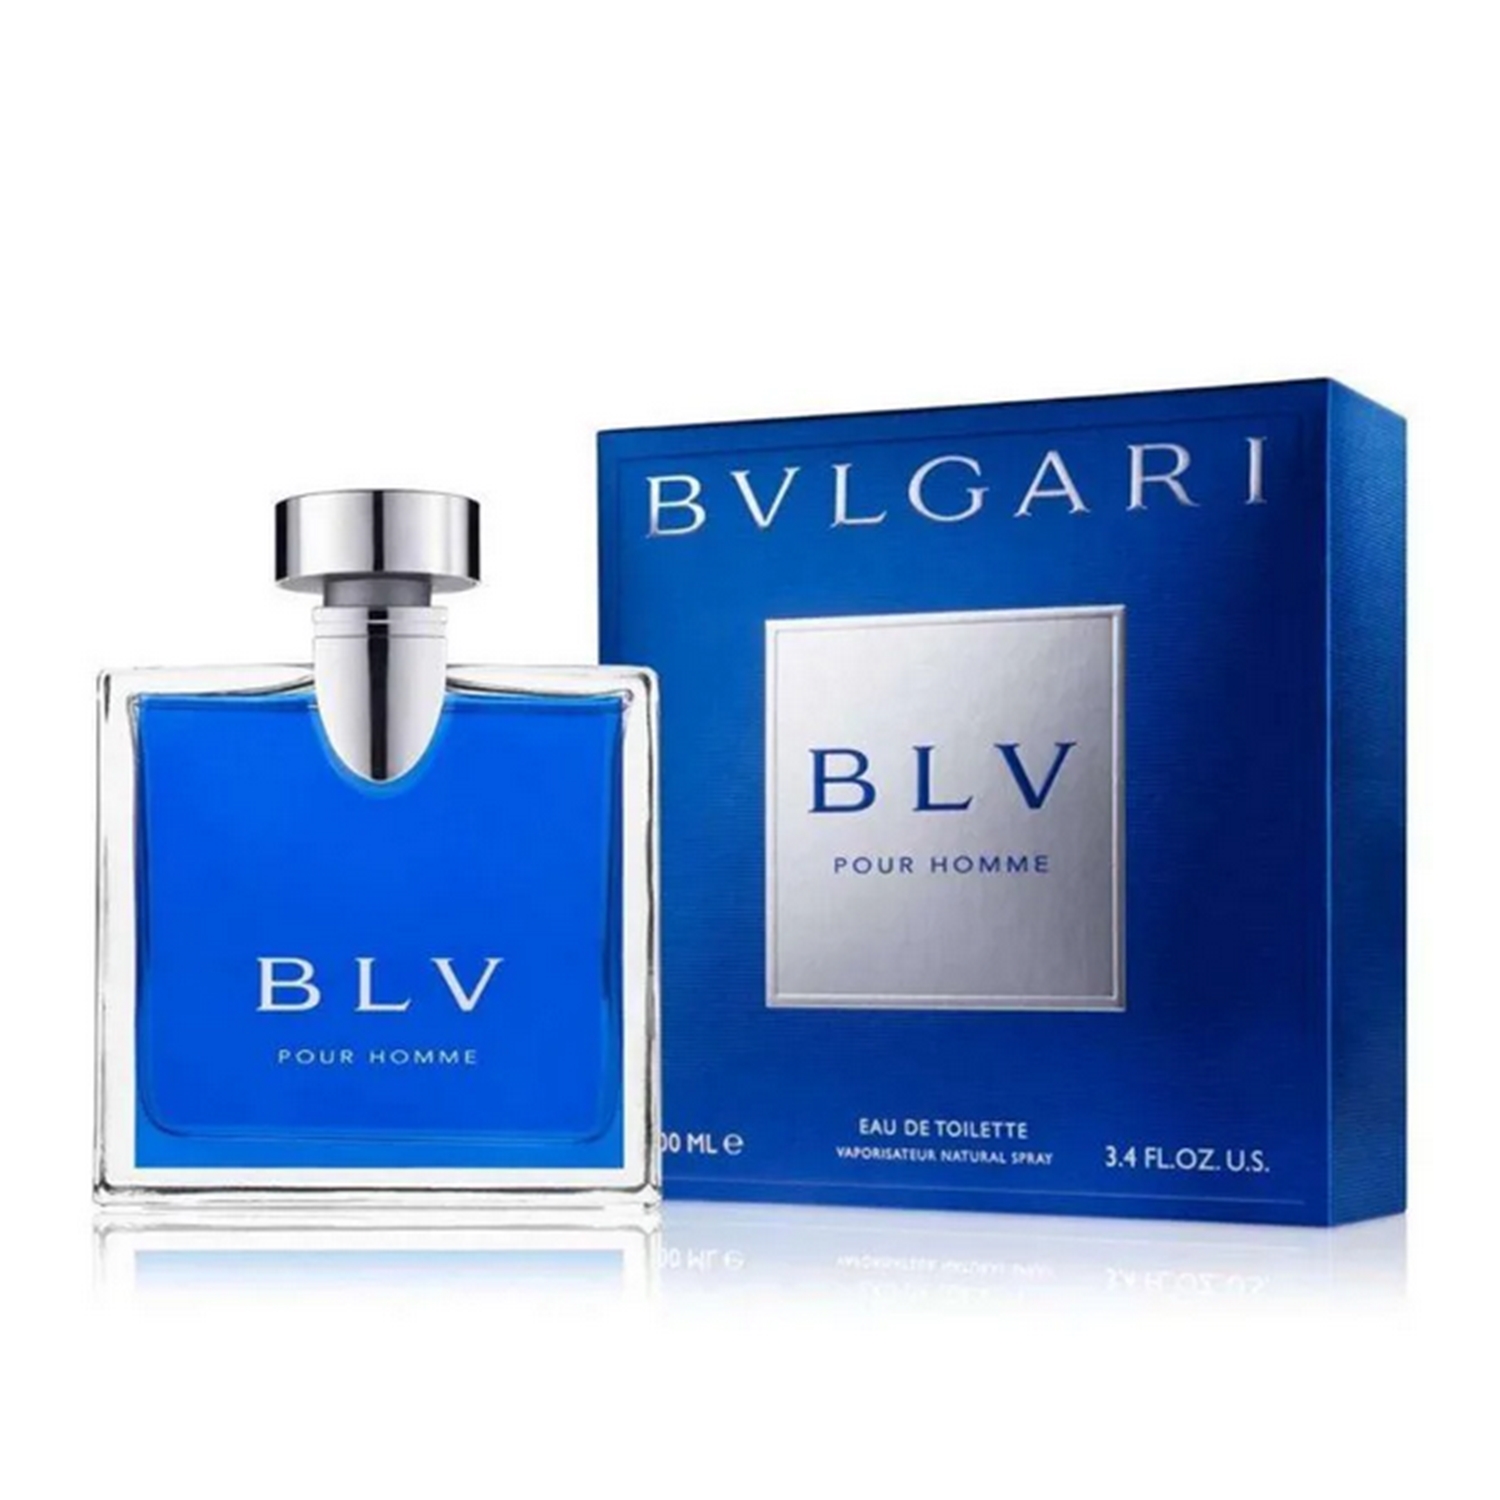 BLV Pour Homme Bvlgari cologne - a fragrance for men 2001